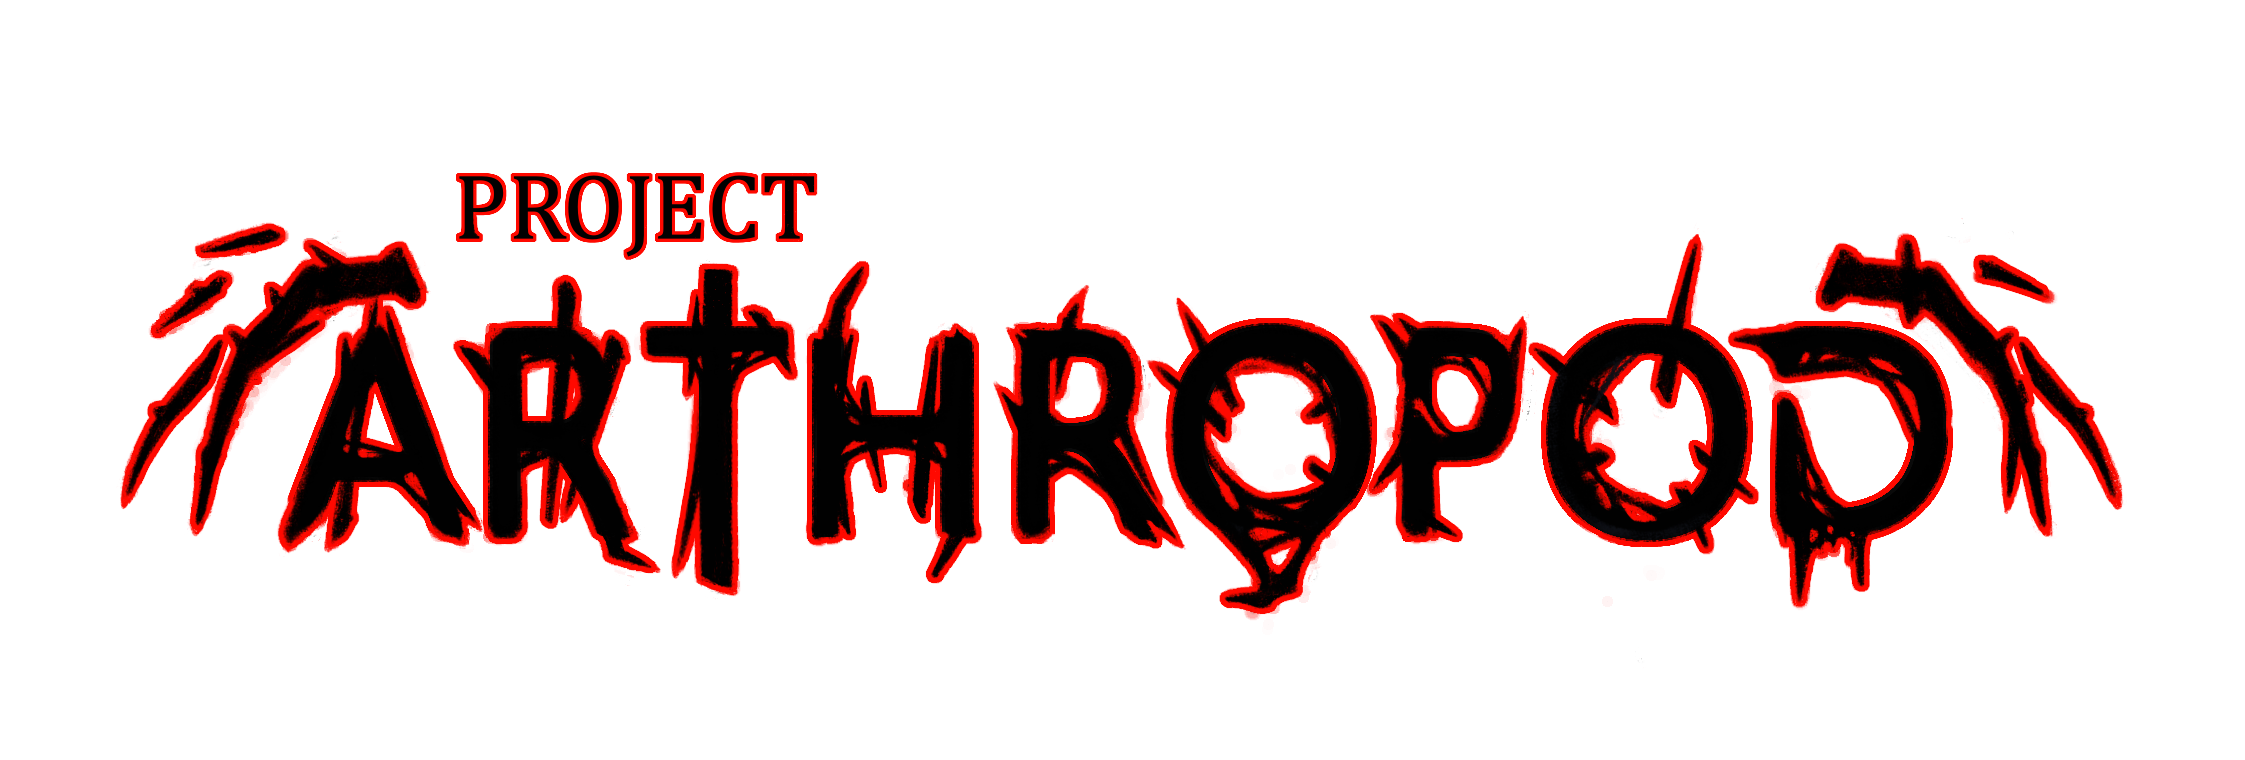 Project Arthropod [demo]